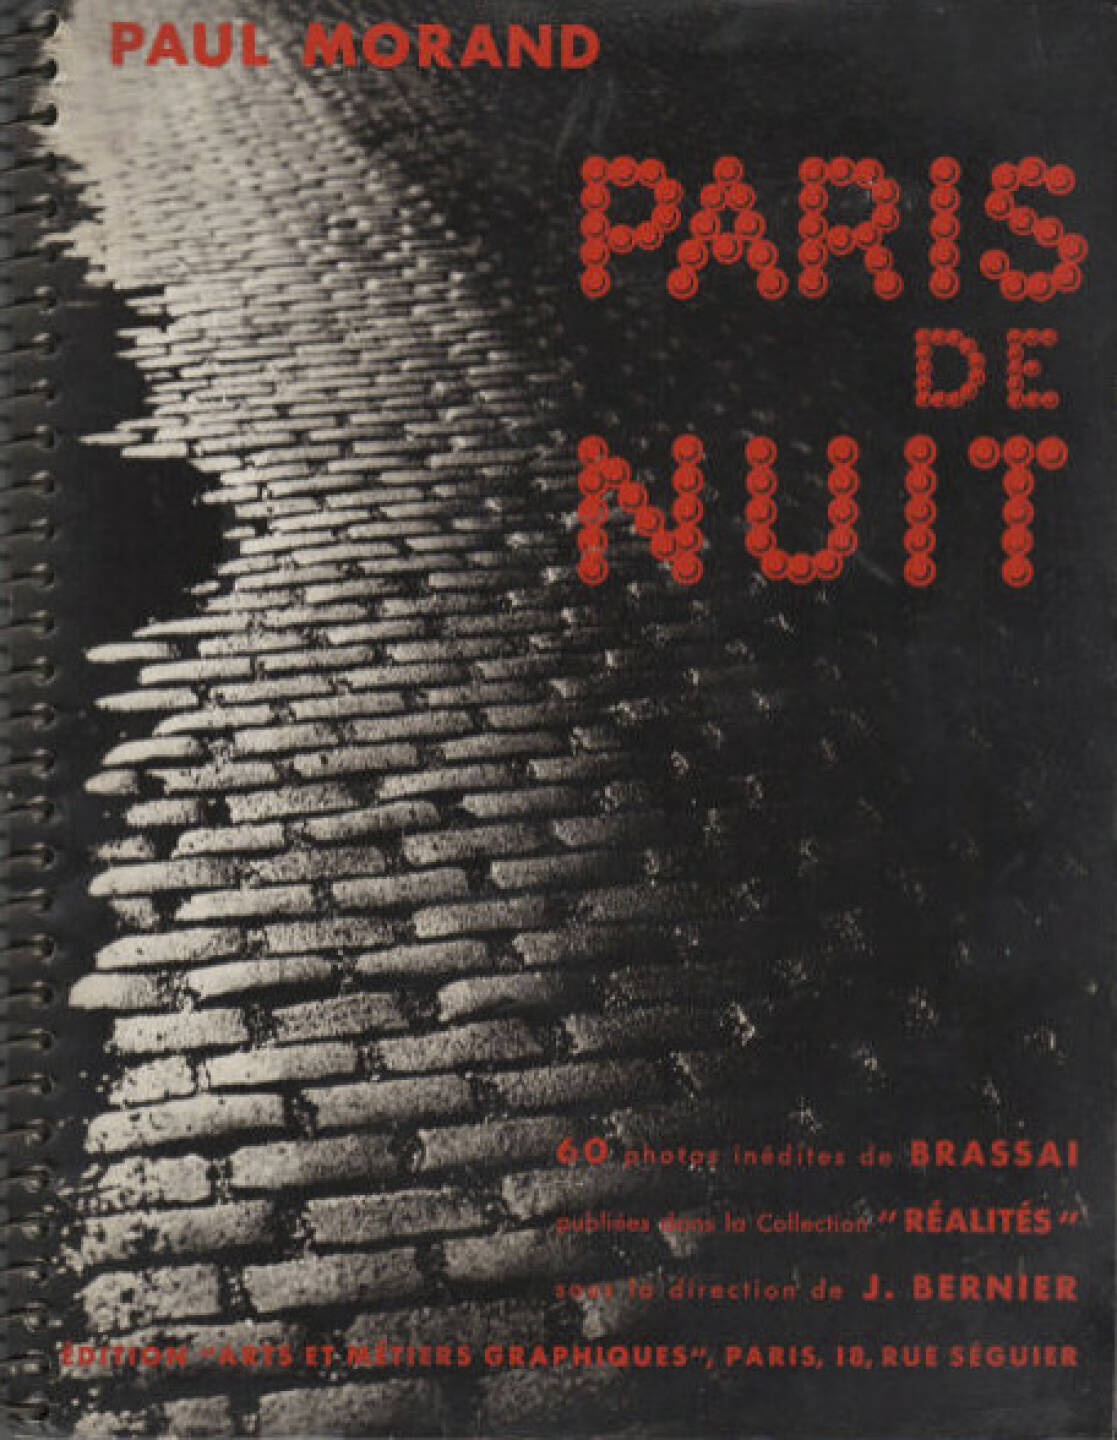 Brassaï - Paris de Nuit. 60 Photos inédites de Brassaï, Preis: 2000-3500 Euro, http://www.josefchladek.com/book/brassai_-_paris_de_nuit_60_photos_inedites_de_brassai